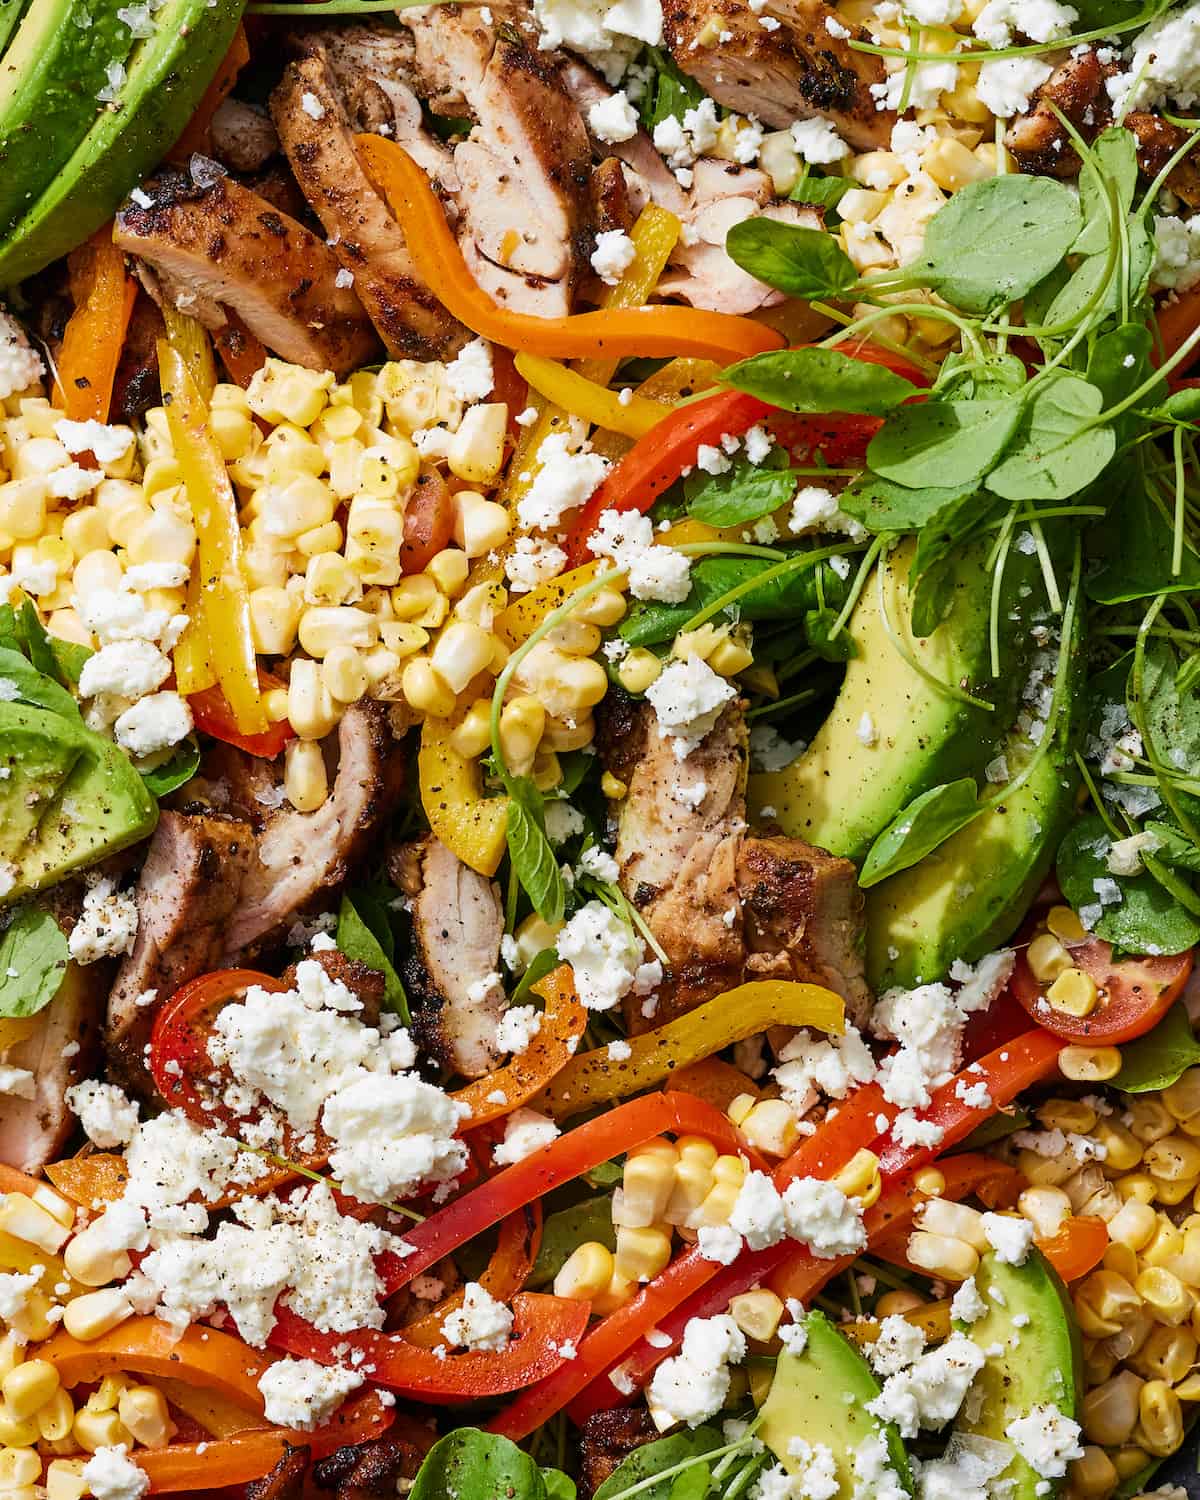 Closeup of a Chicken Fajita cobb salad, with the shredded chicken, avocado, corn, peppers, greens and feta.